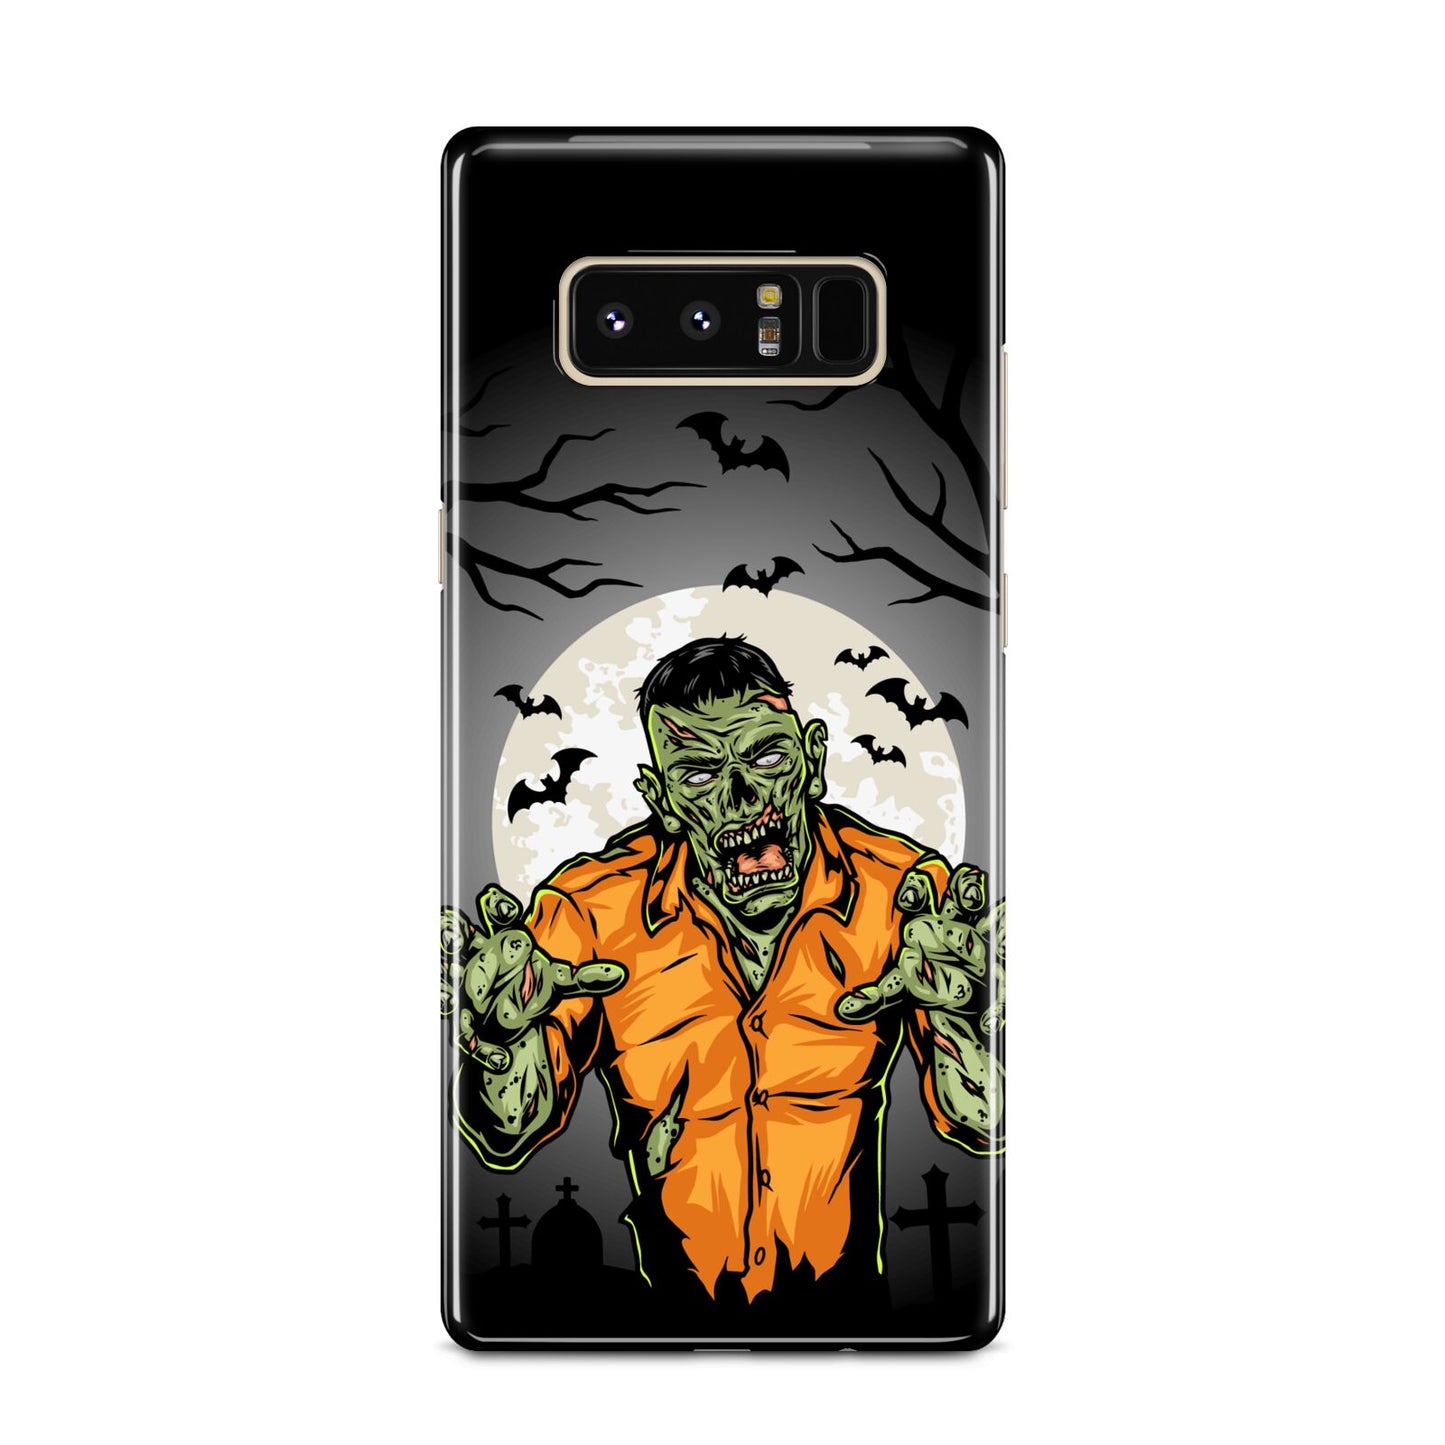 Zombie Night Samsung Galaxy Note 8 Case